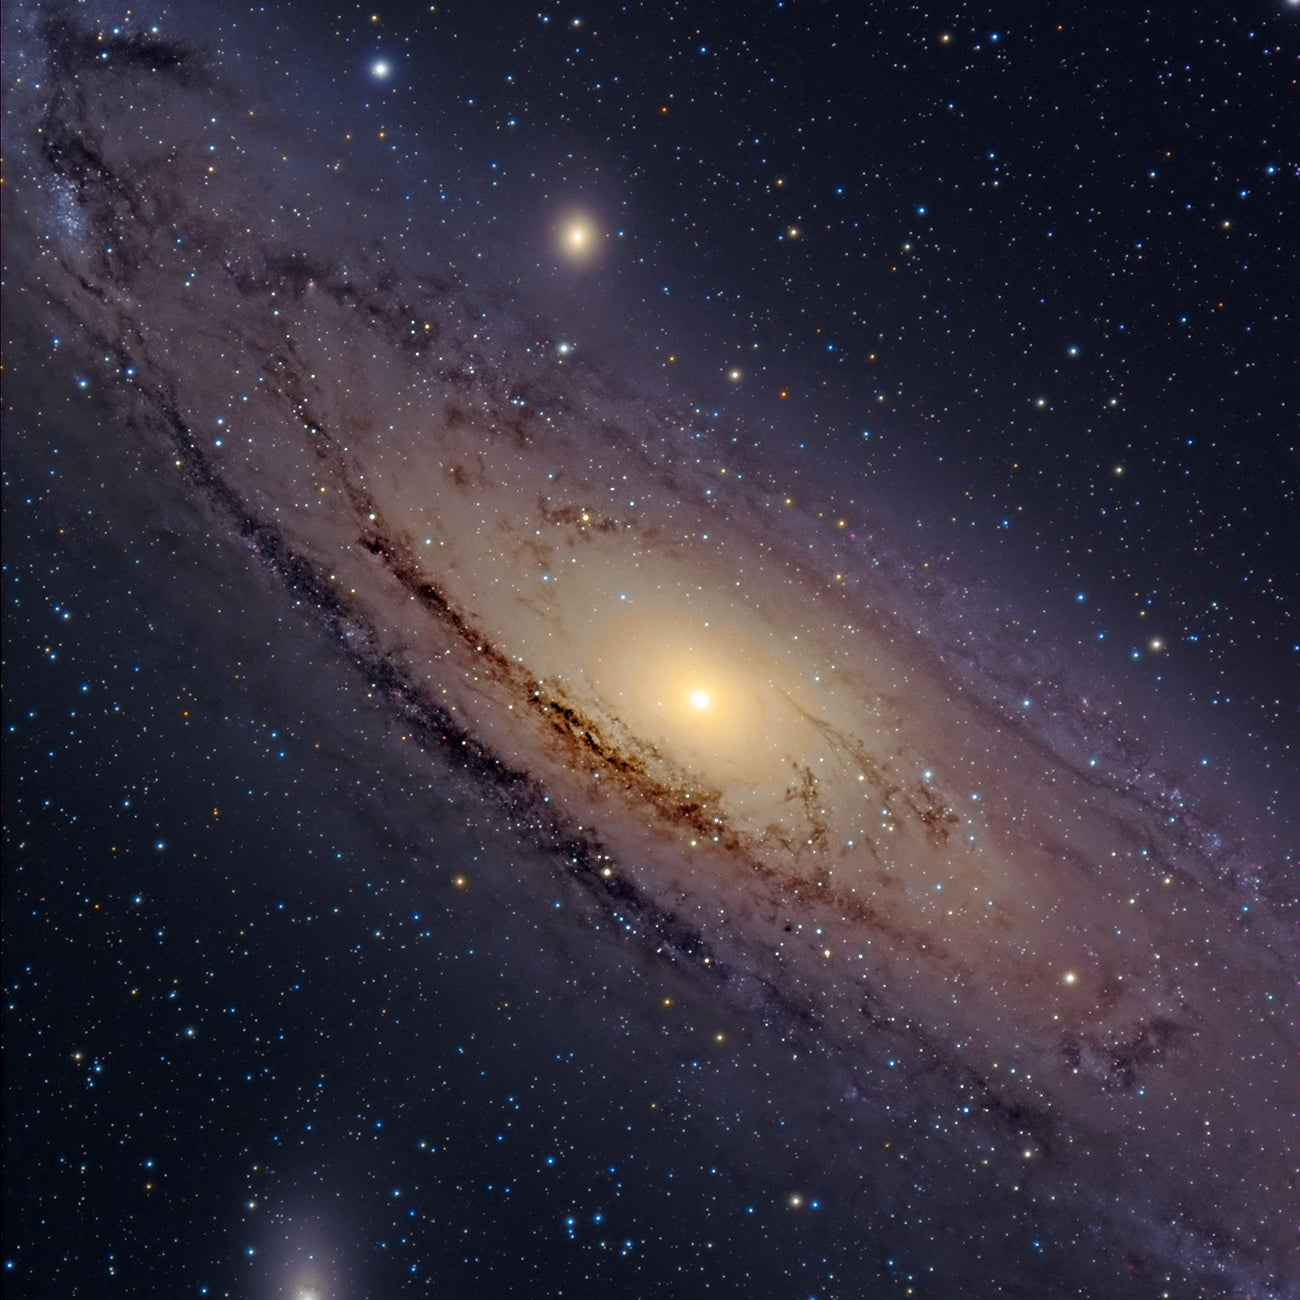 Space Cushion - Andromeda Galaxy - The Tiny Art Co